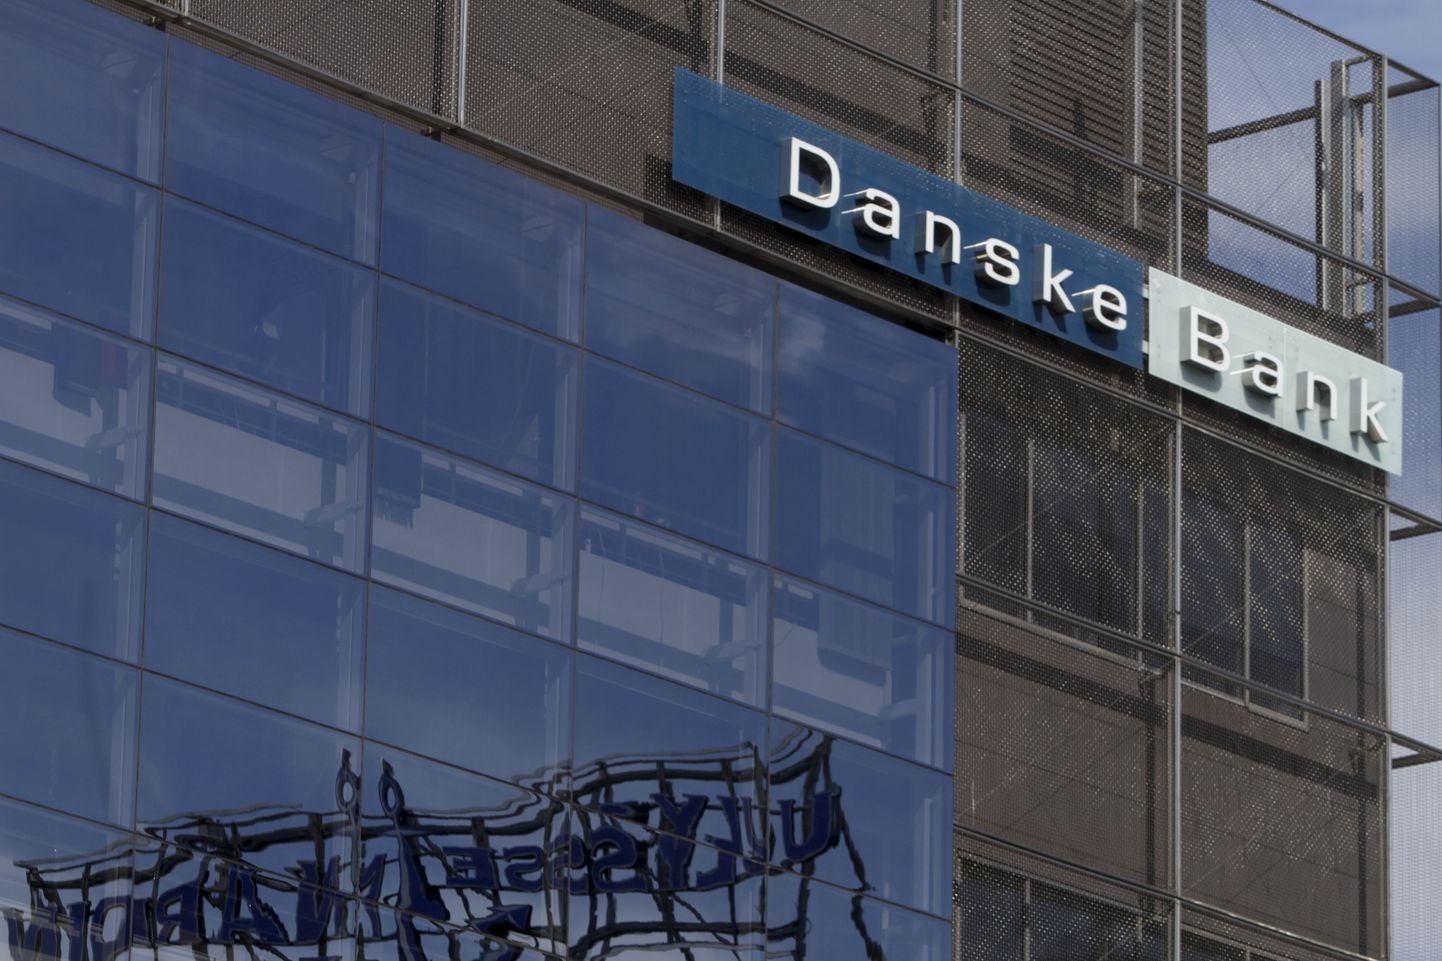 Банк Danske.